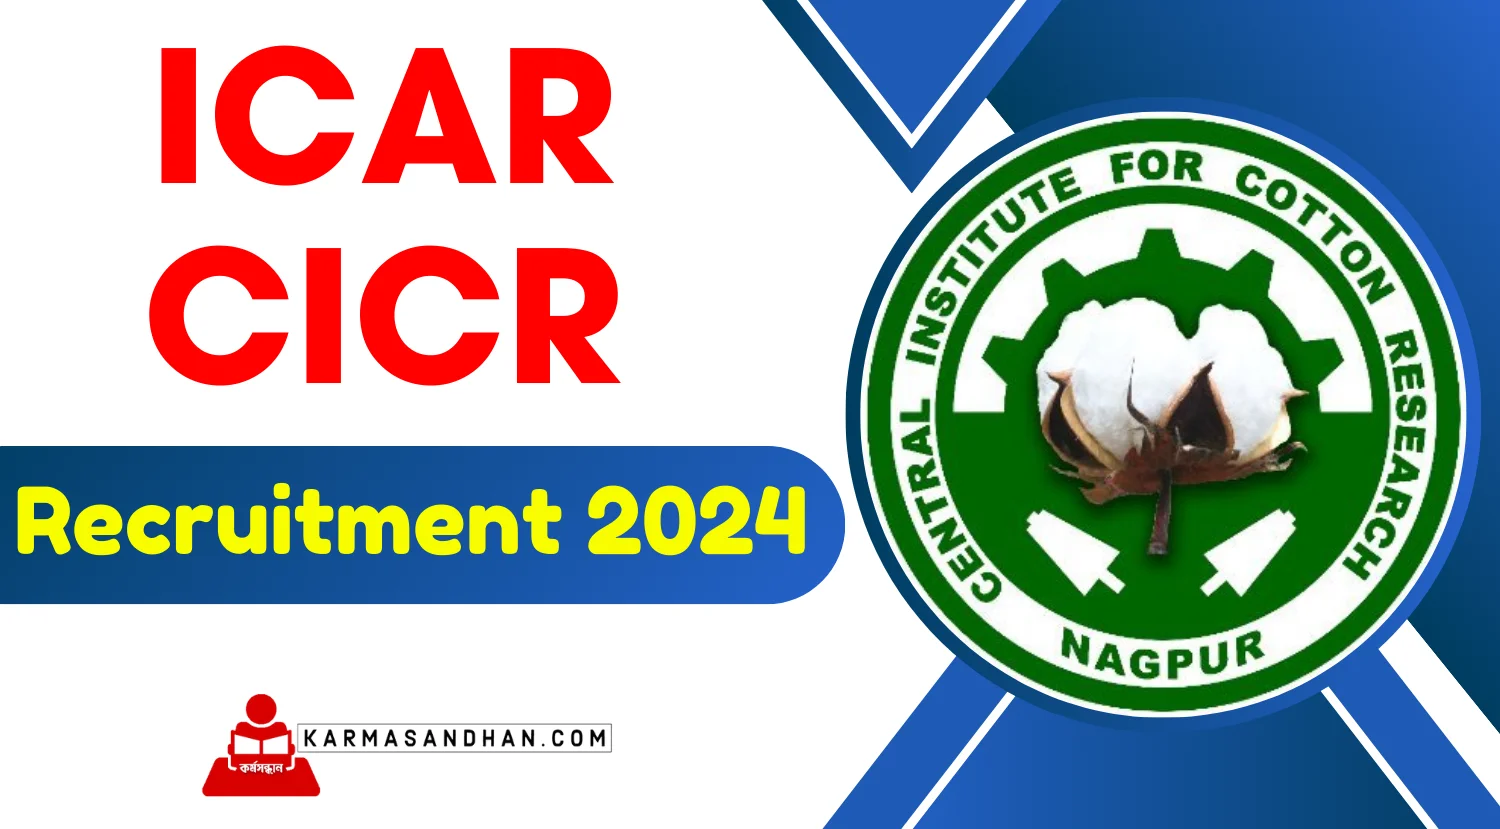 ICAR CICR Young Professional II Recruitment 2024